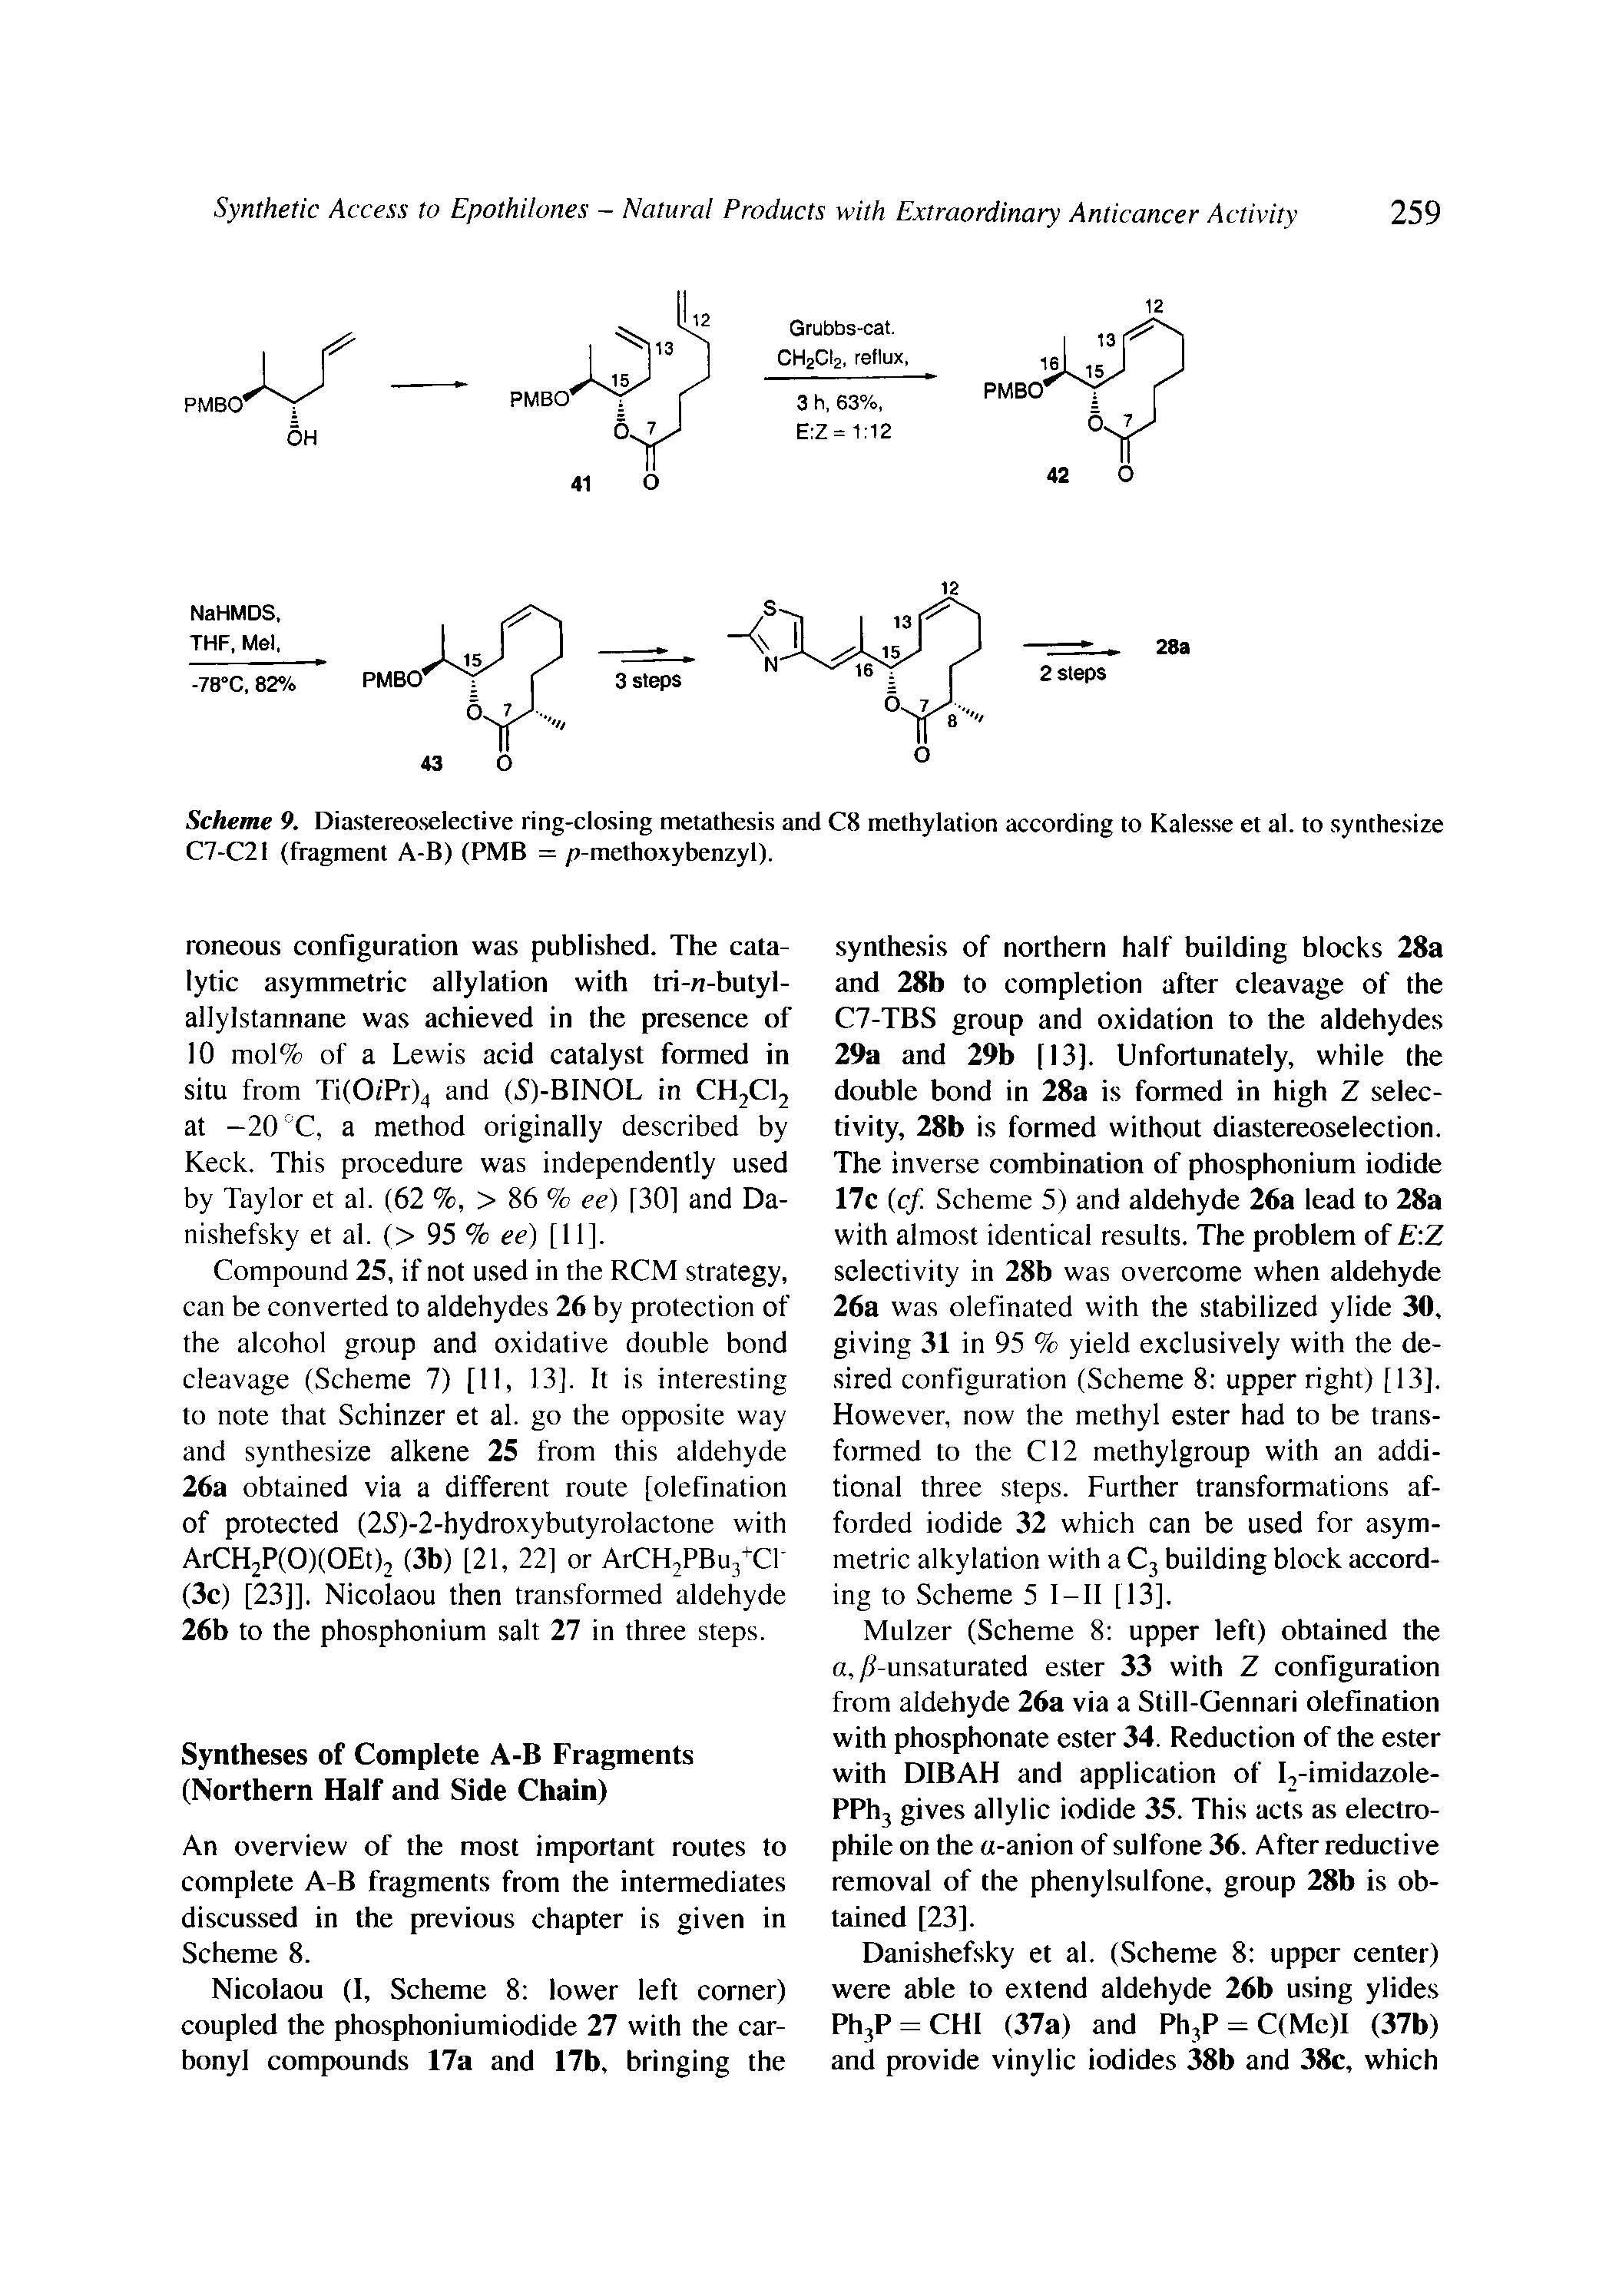 Scheme 9. Diastereoselective ring-closing metathesis and C8 methylation according to Kalesse et al. to synthesize C7-C2I (fragment A-B) (PMB = /i-methoxybenzyl).